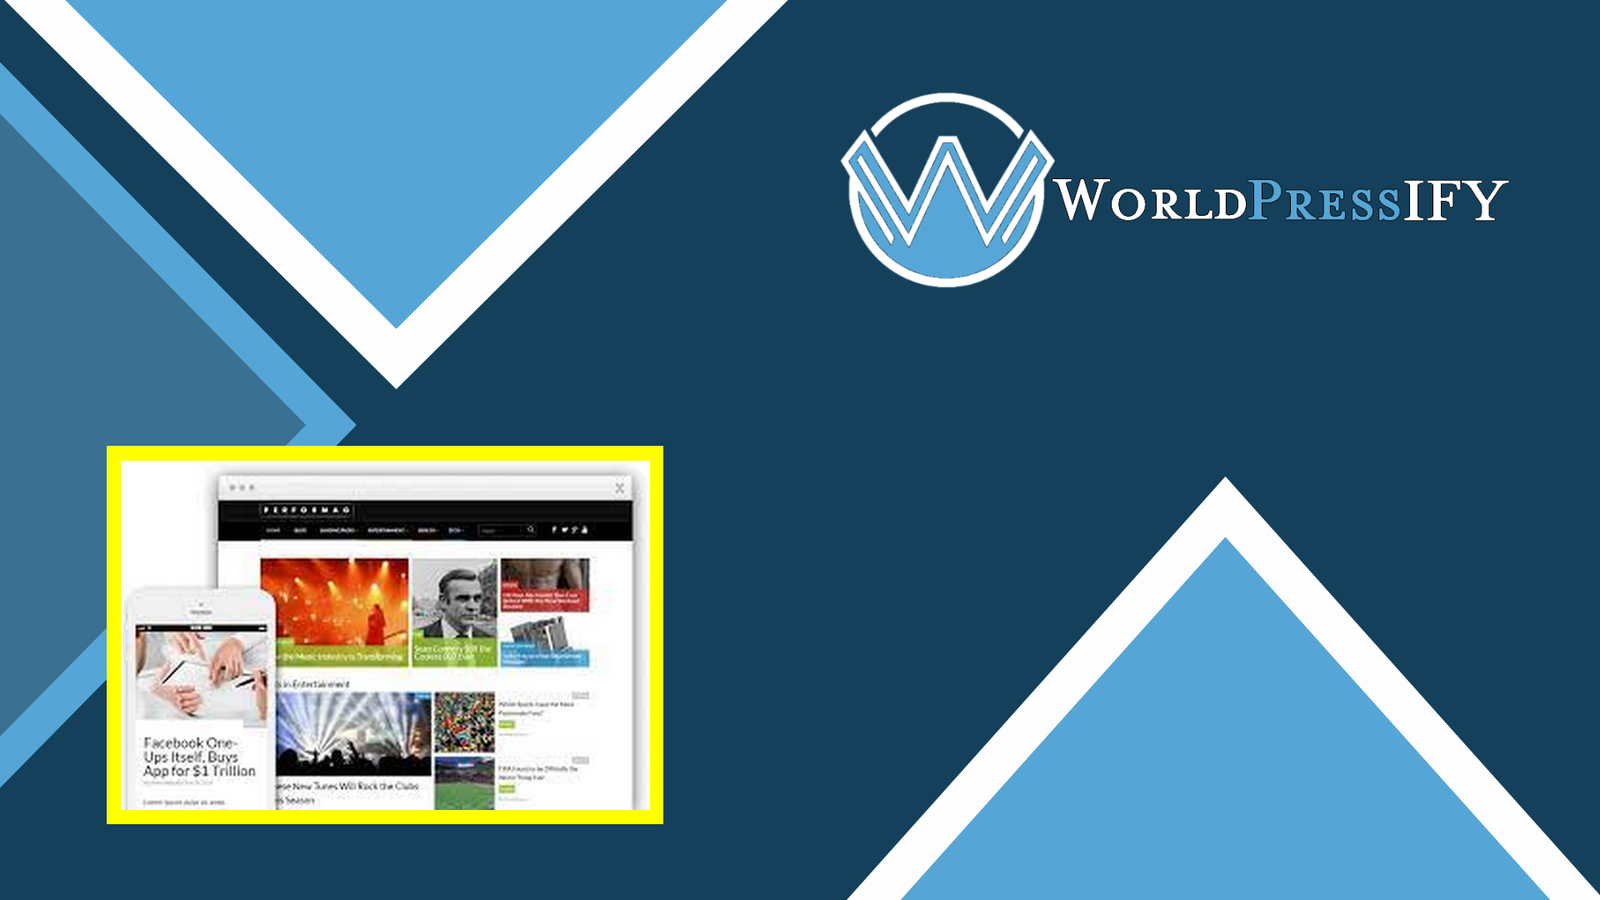 Thrive Themes Performag WordPress Theme - WorldPress IFY